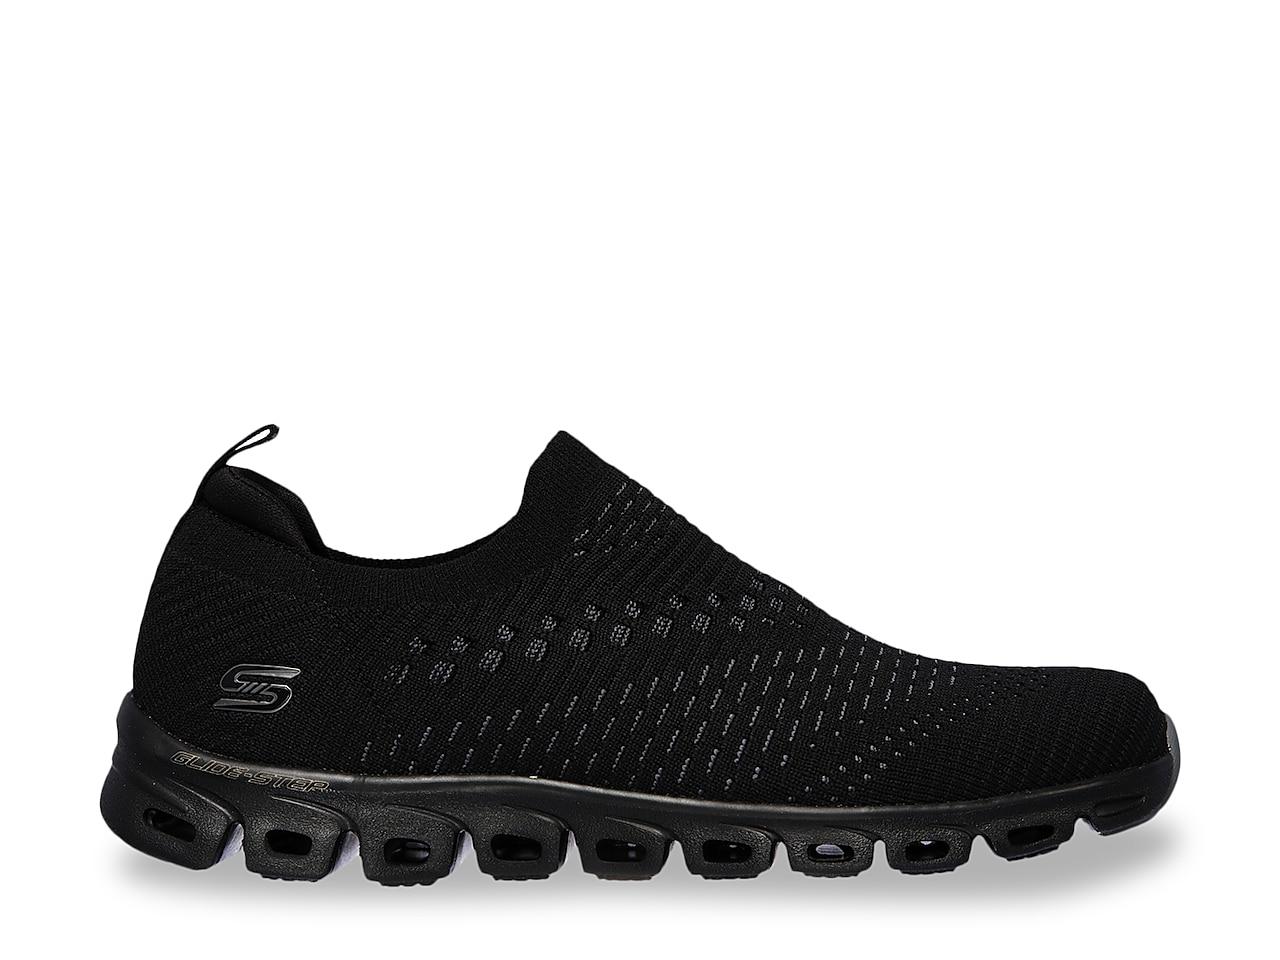 Skechers Synthetic Glide-step Oh So Soft Slip-on Sneaker in Black - Lyst